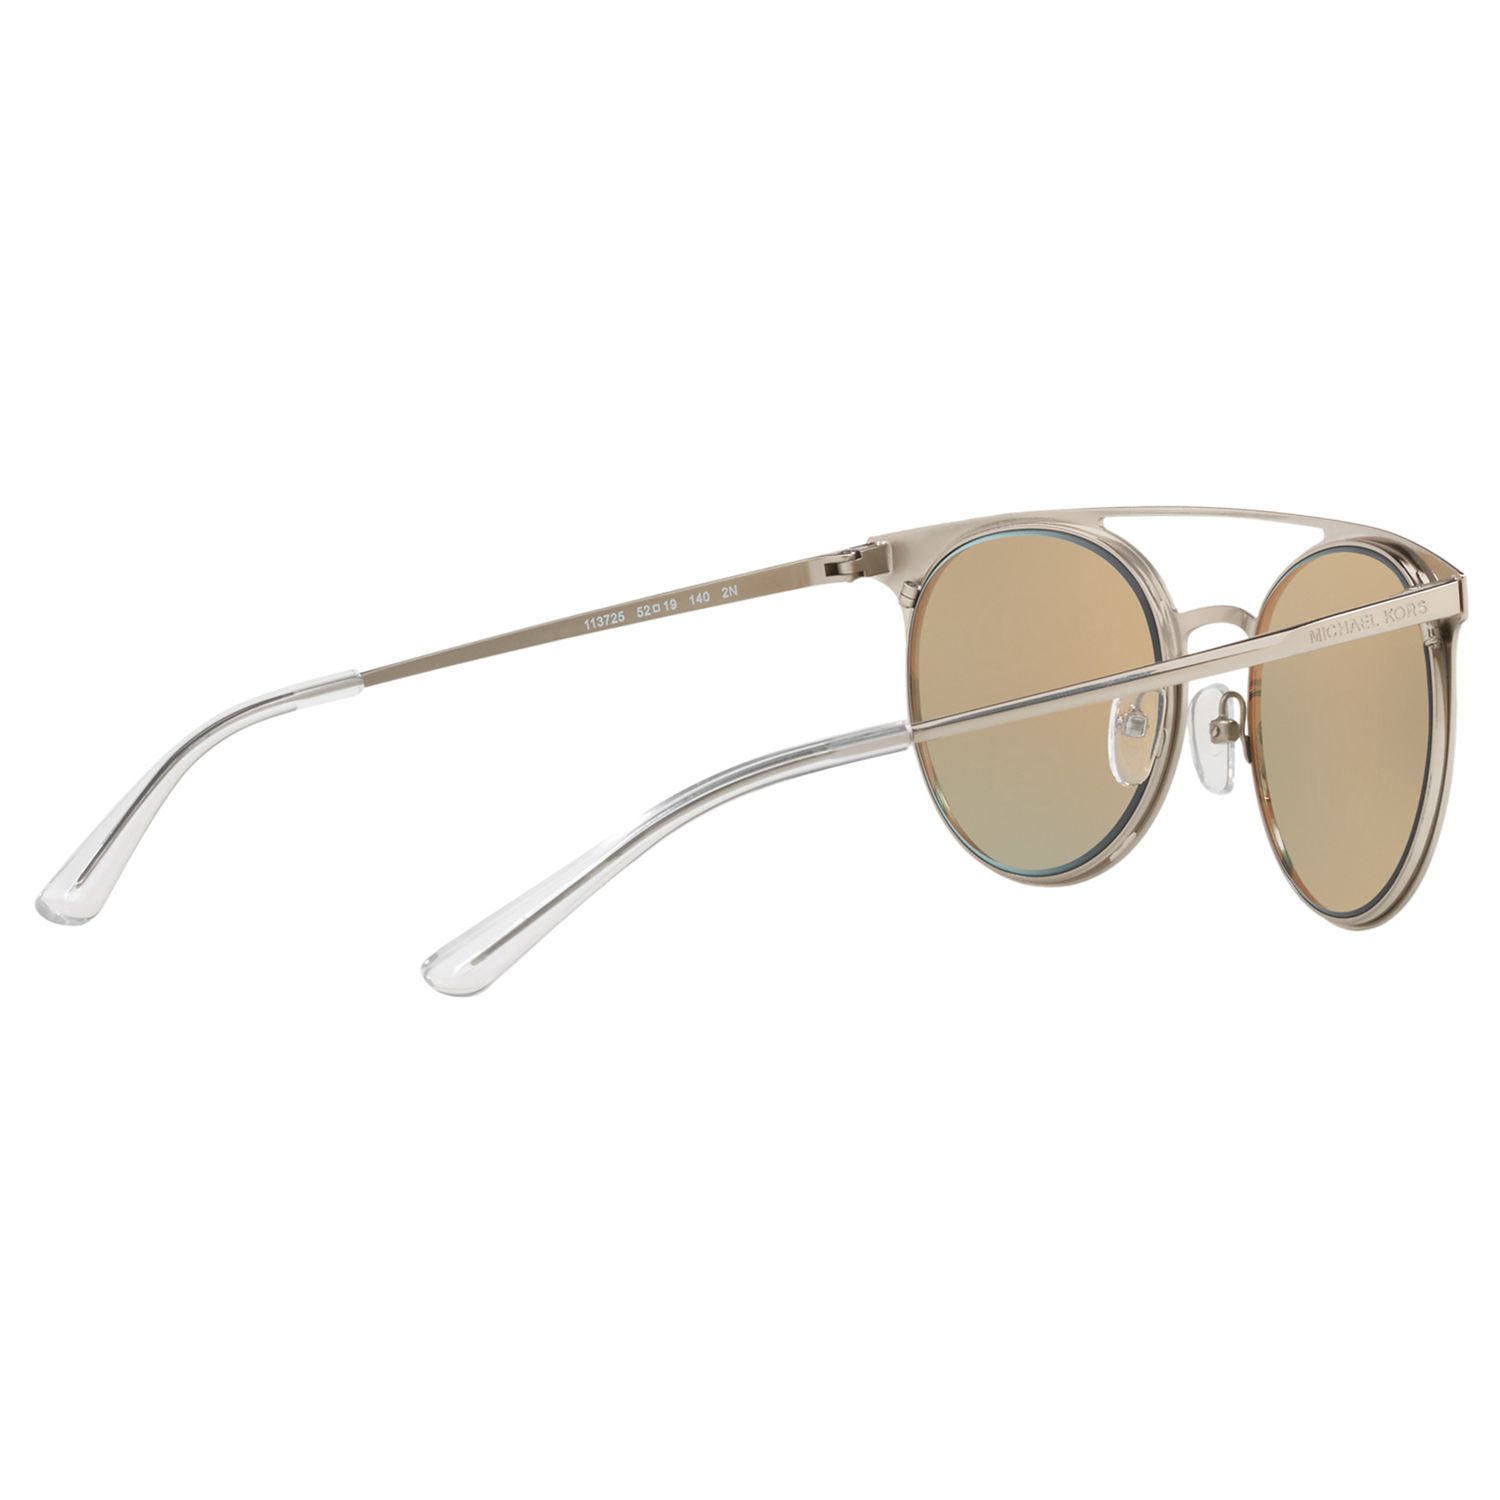 Michael Kors Mk1030 Women S Grayton Round Sunglasses Silver Mirror